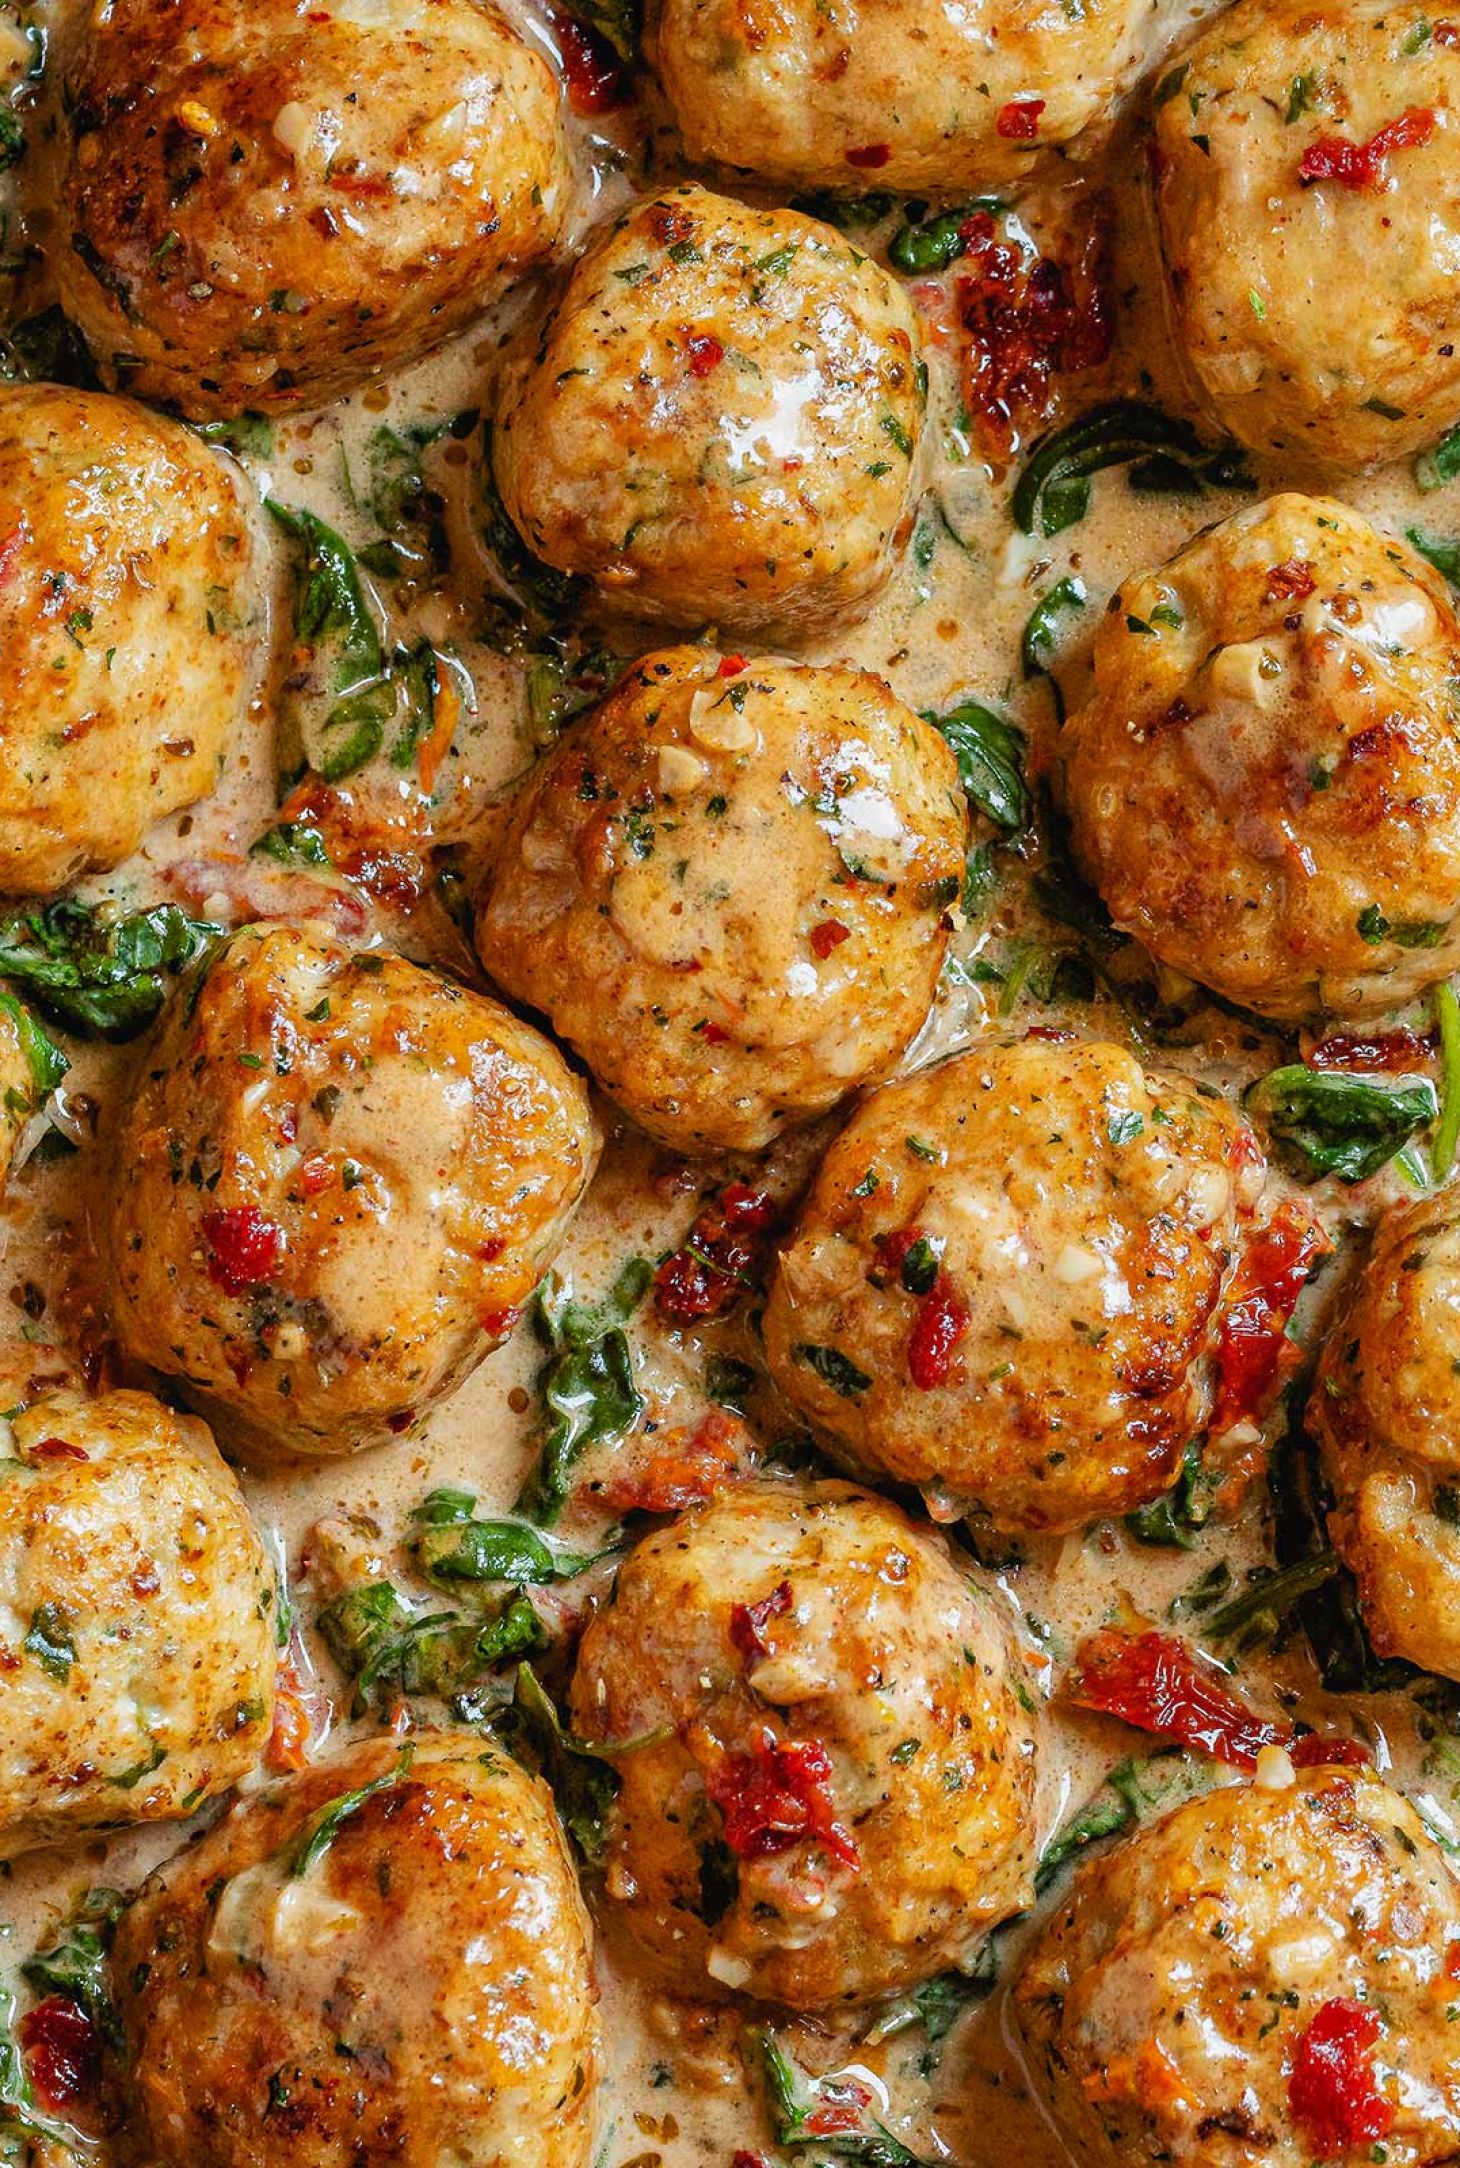 Creamy Spinach Turkey Meatballs - #recipe by #eatwell101 - https://www.eatwell101.com/creamy-spinach-turkey-meatballs-recipe